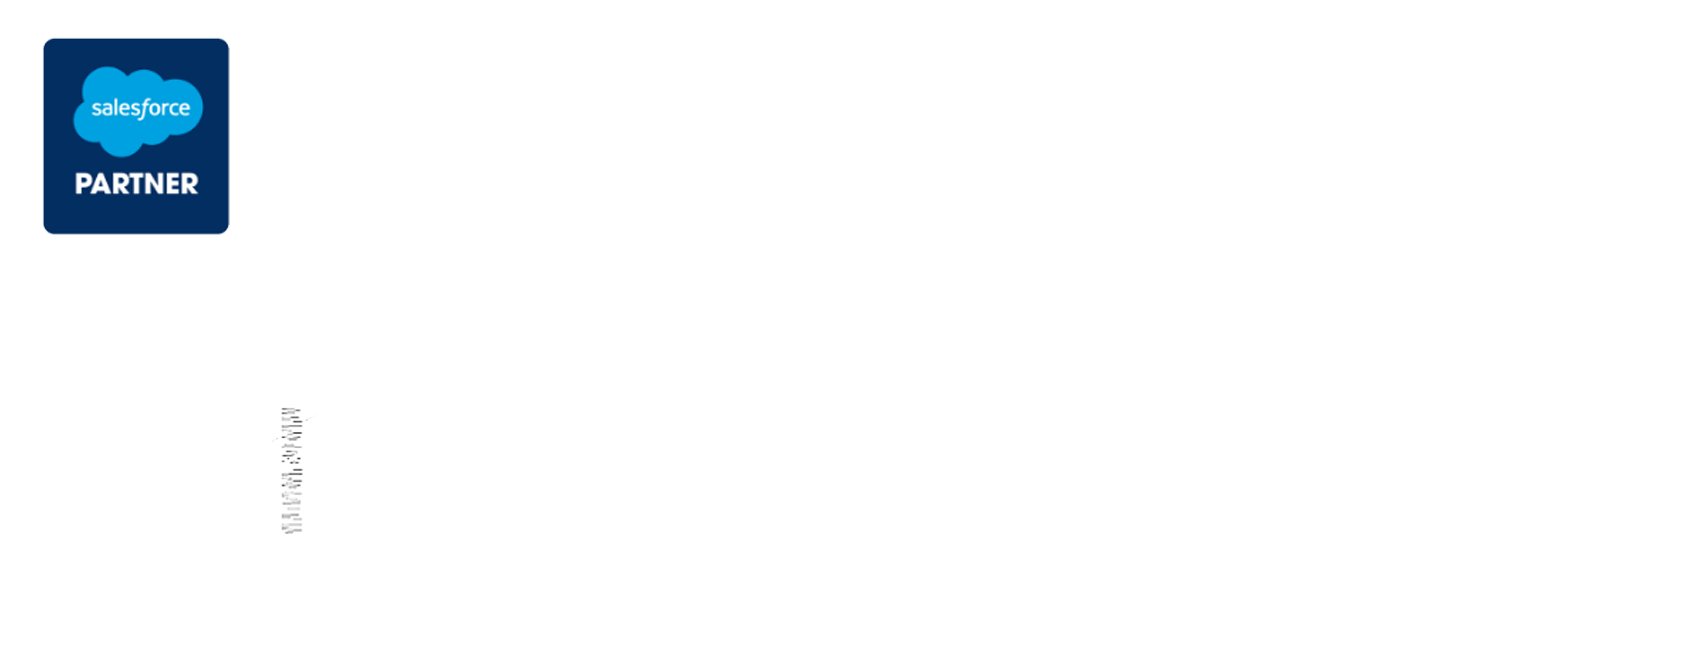 Meet us at Realcomm 2023